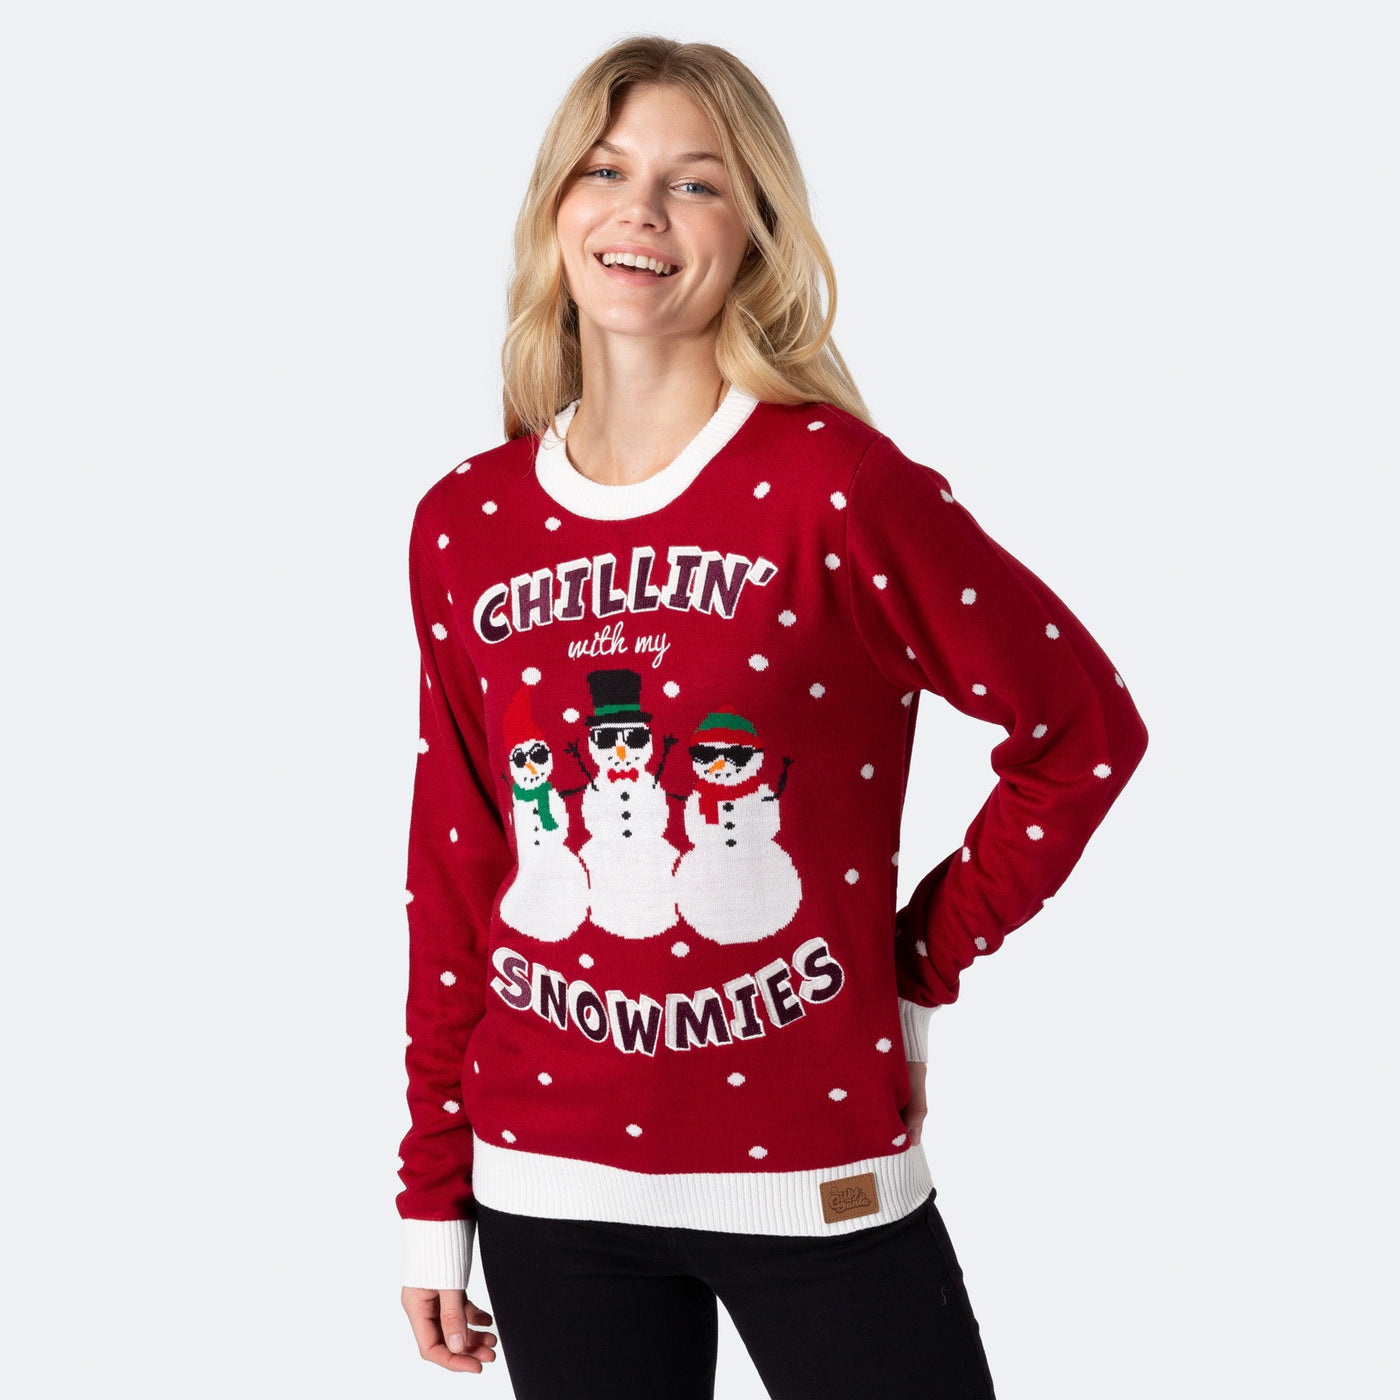 Women's Snowmies Christmas Sweater